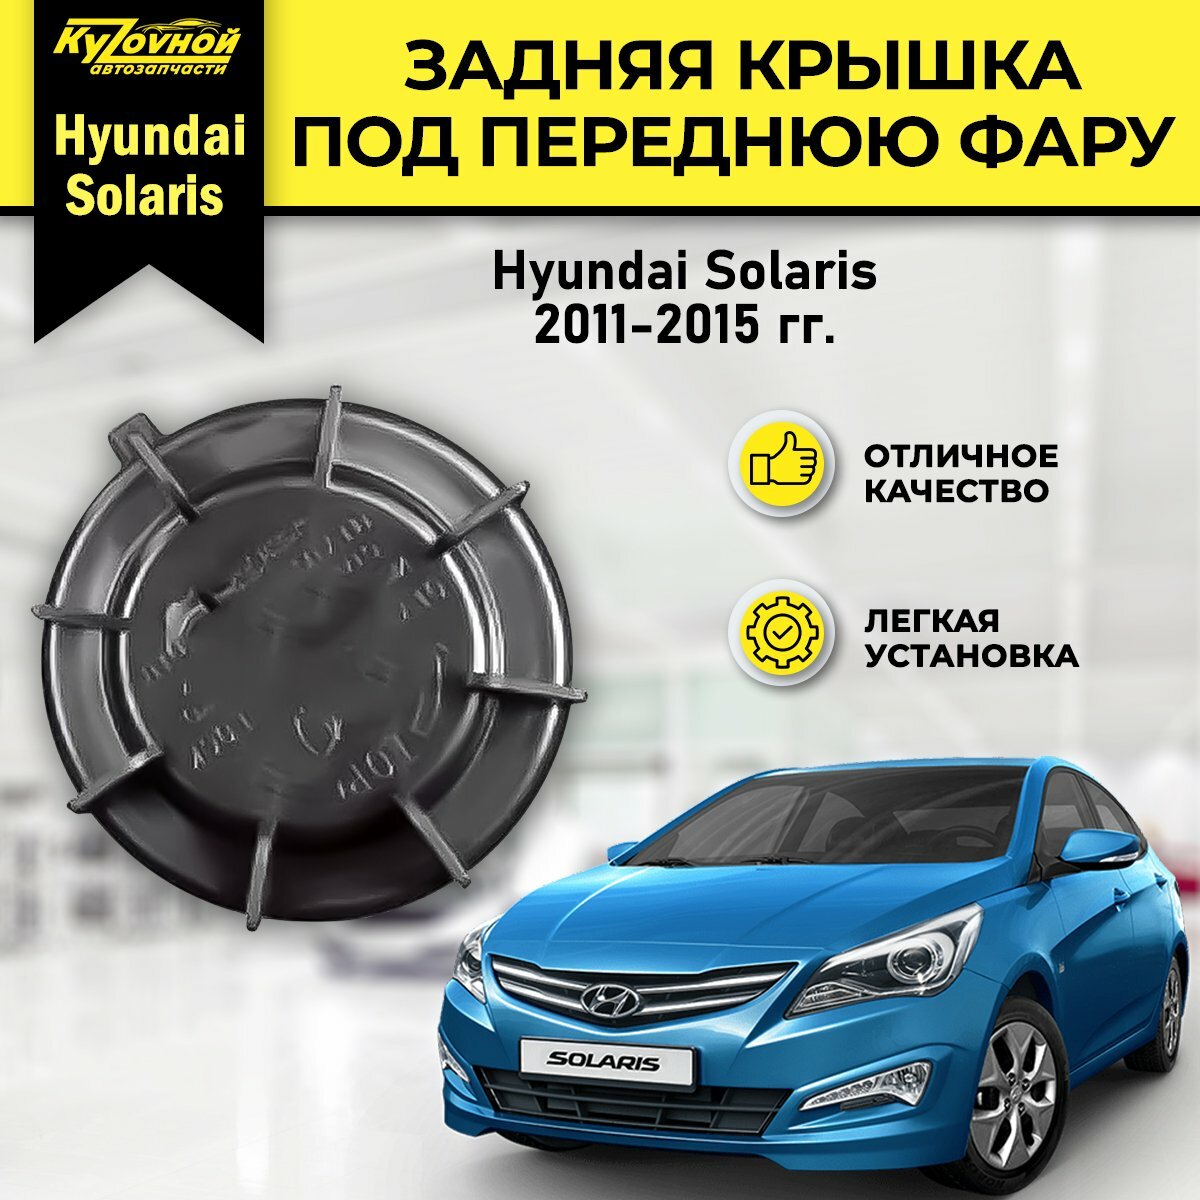 Задняя крышка фары для а/м Хендай Солярис Hyundai Solaris 2011-2015